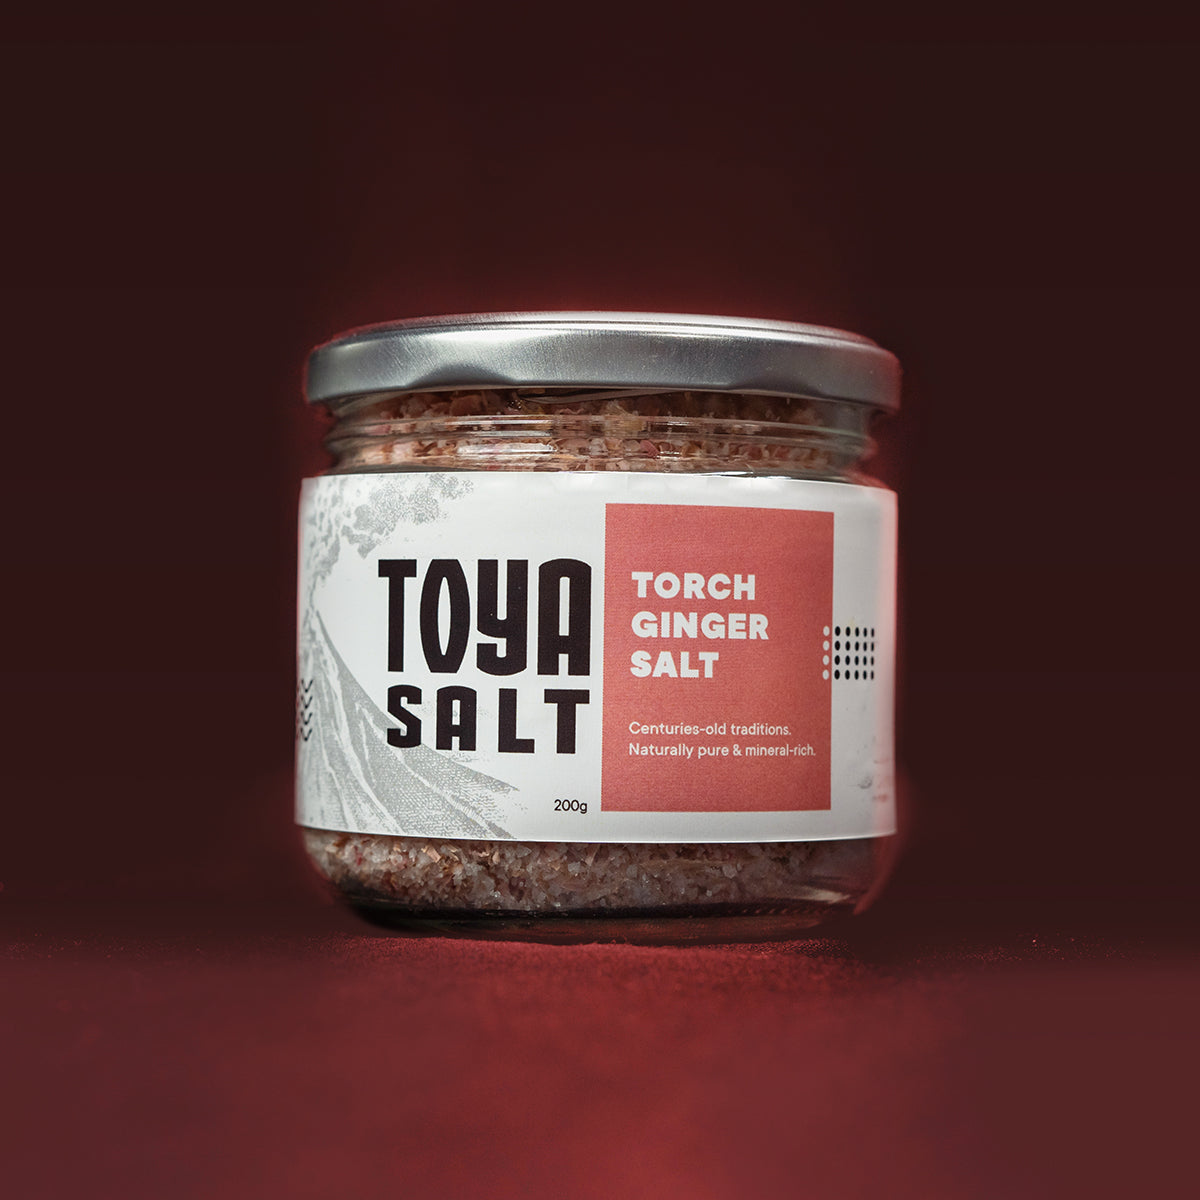 Torch Ginger Salt - Toya Salt